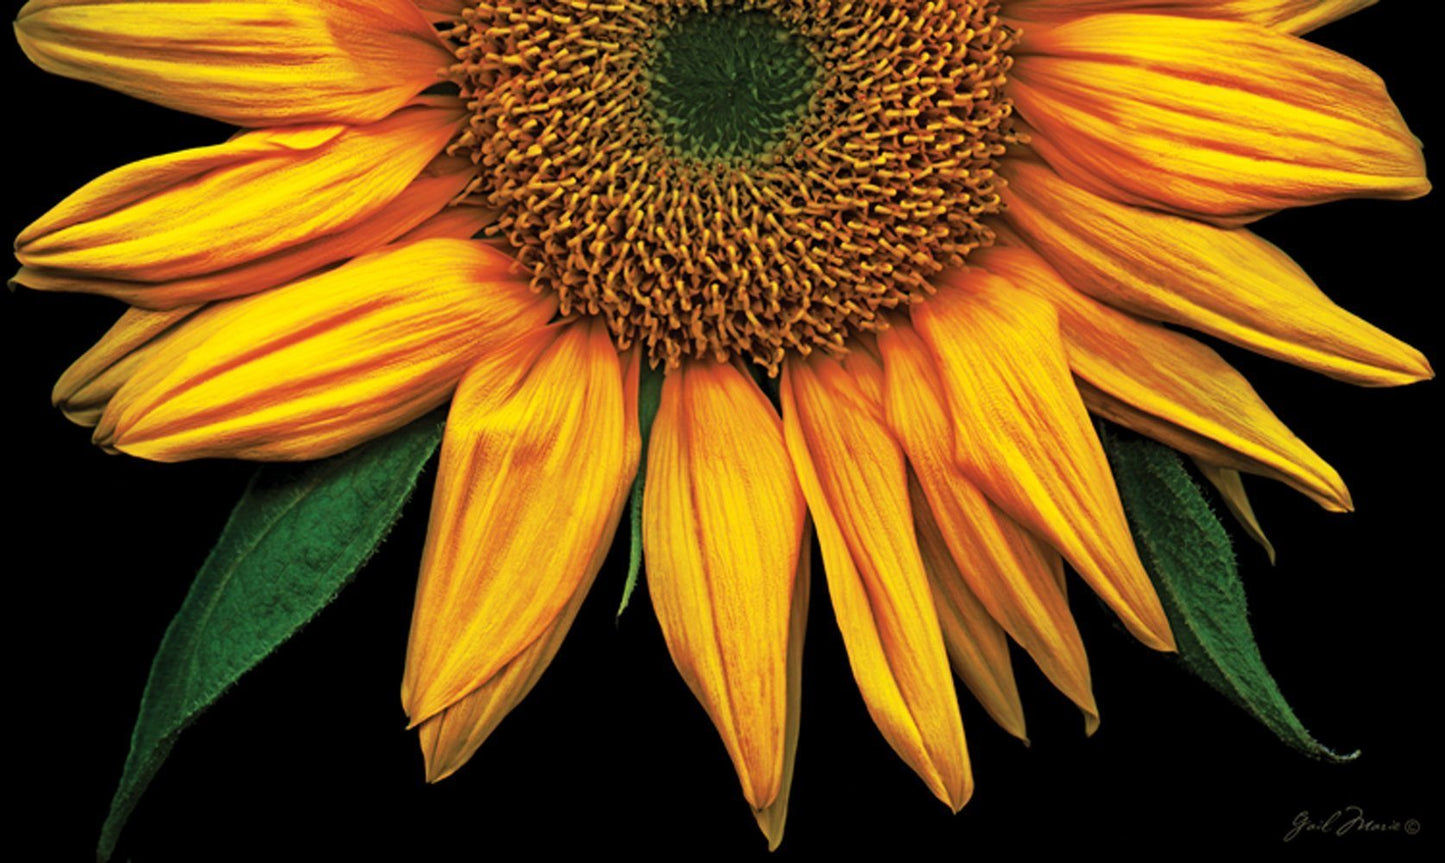 Toland Home Garden - Sunflower Door Mat